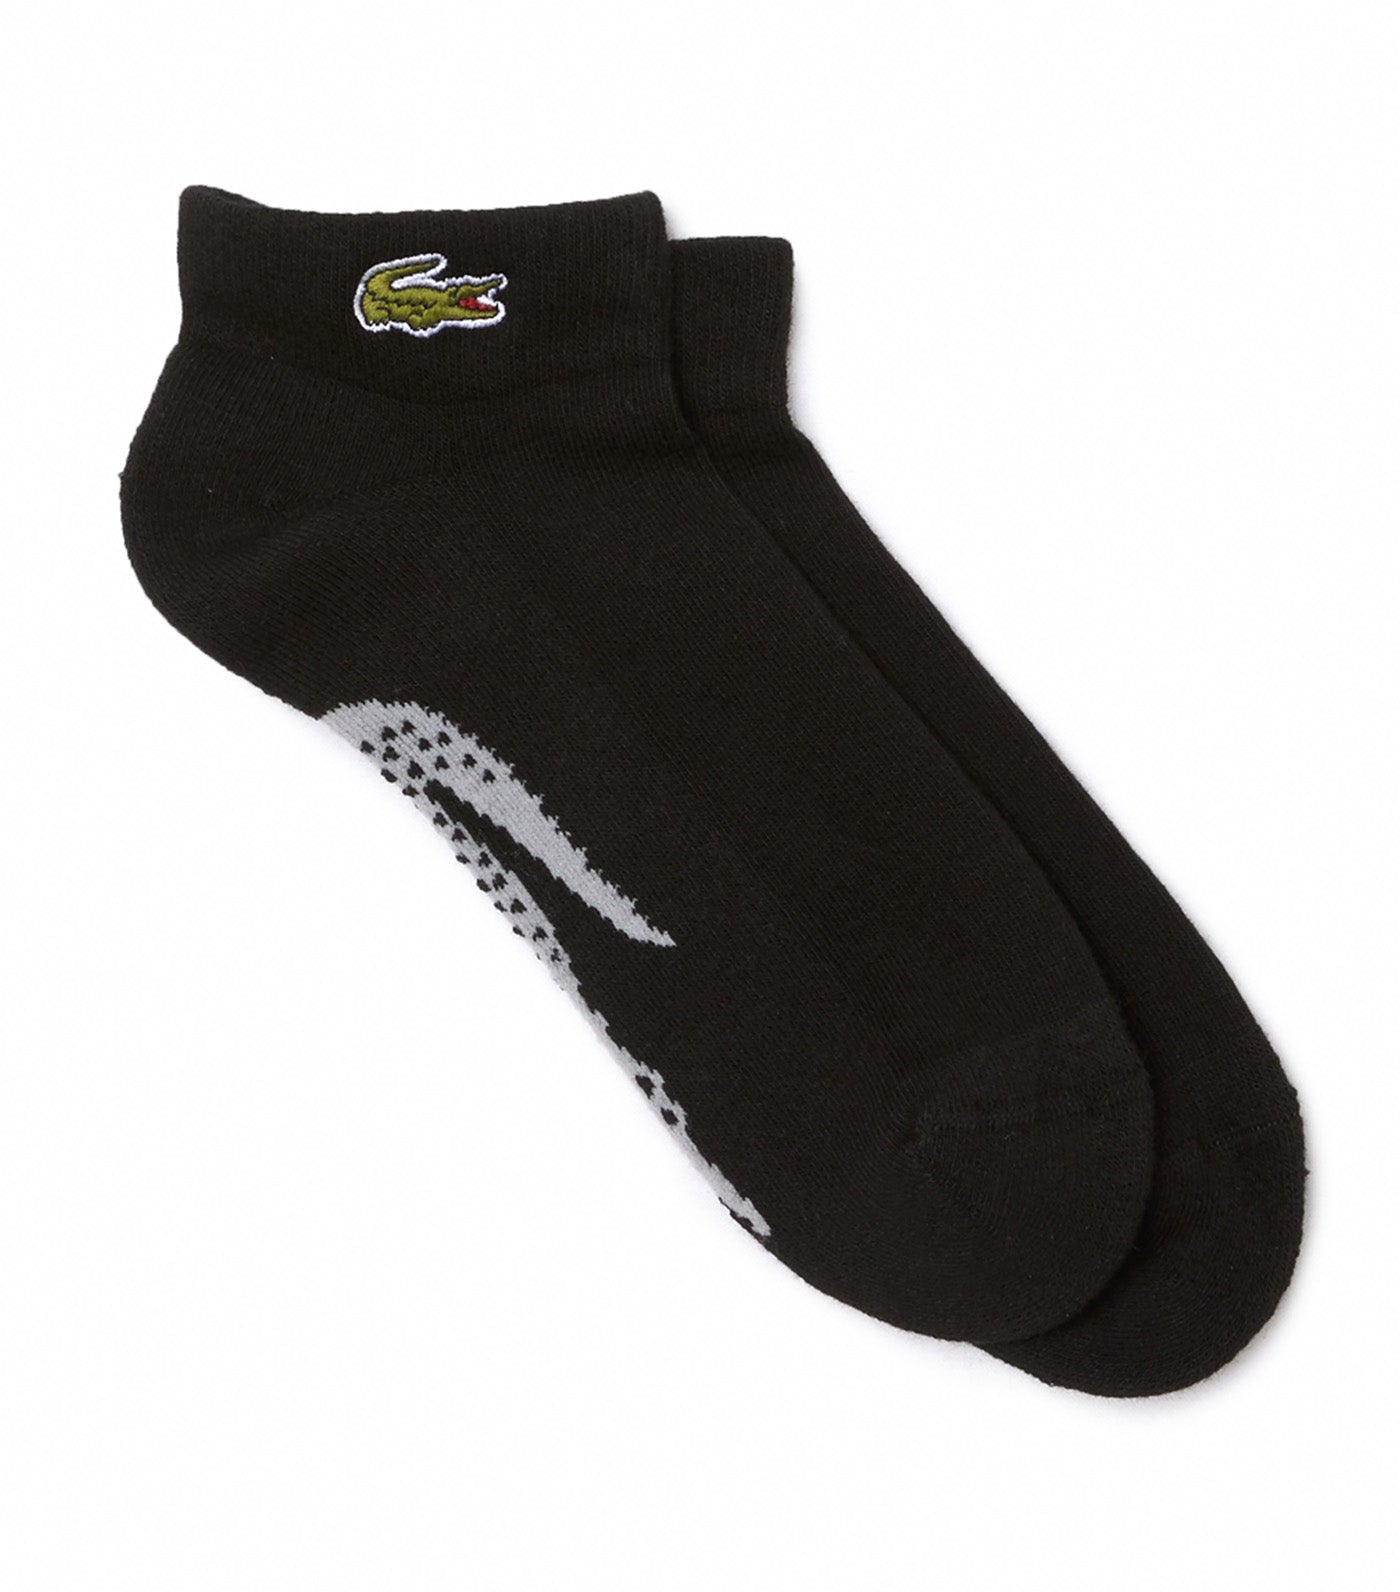 Men's SPORT Stretch Cotton Low-Cut Socks Black/Silver Chine